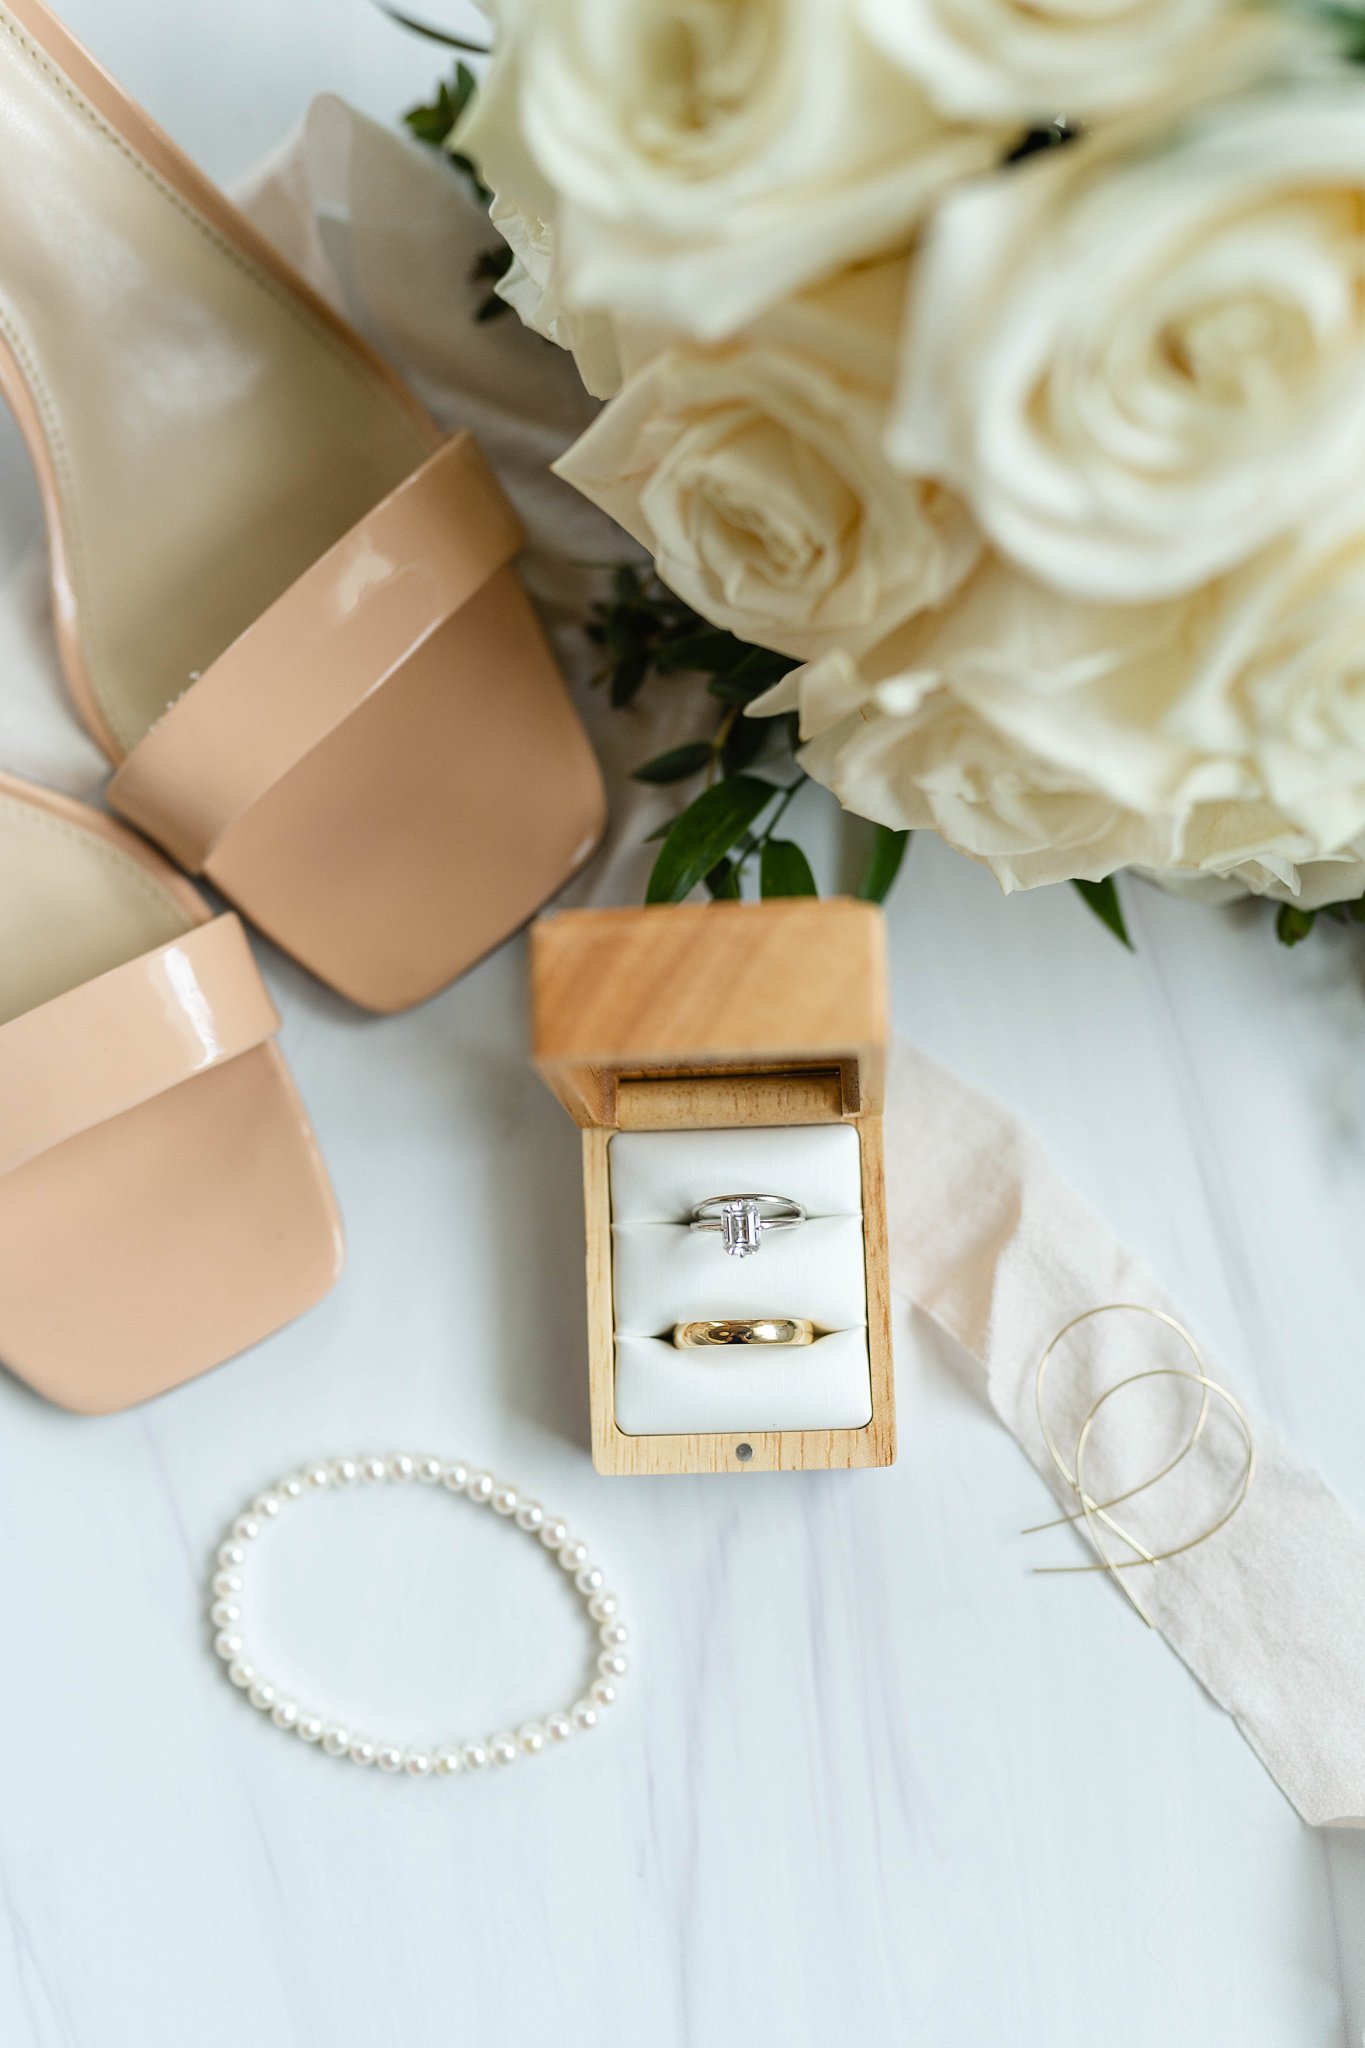 Southwest Florida photograph captures beach bridal details of emerald cut engagement ring and white rose bouquet